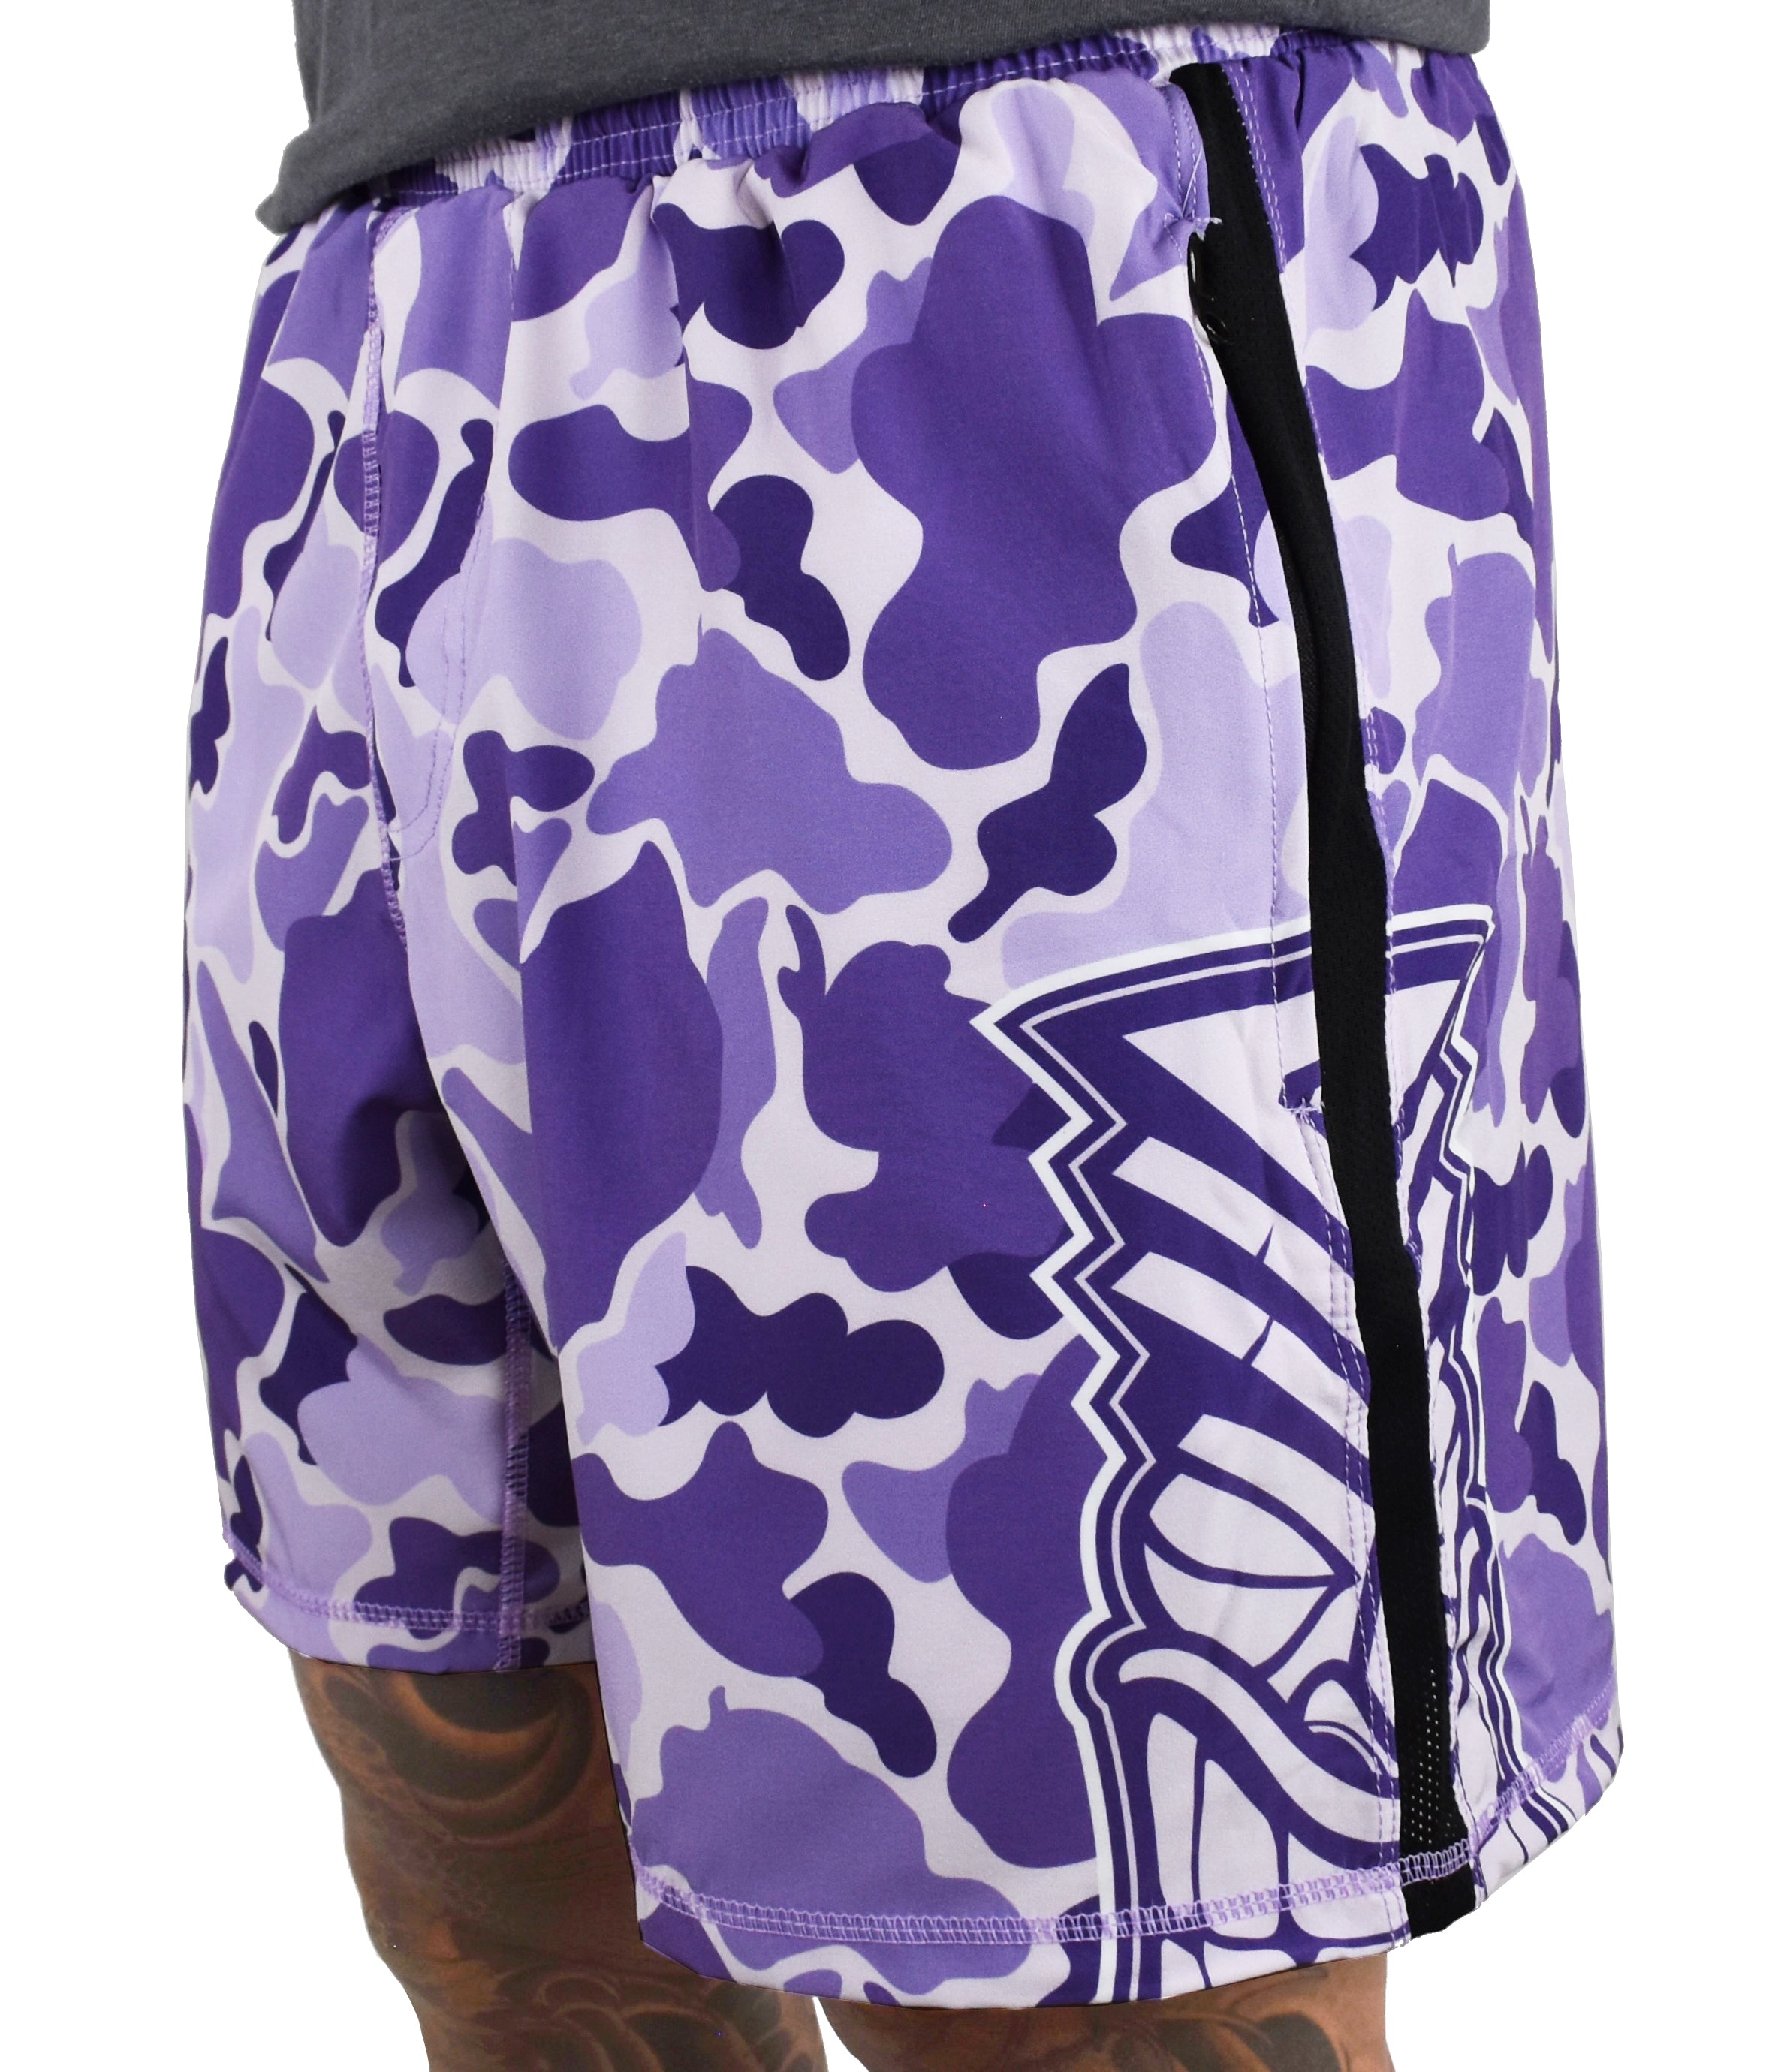 Purple Camo Shorts